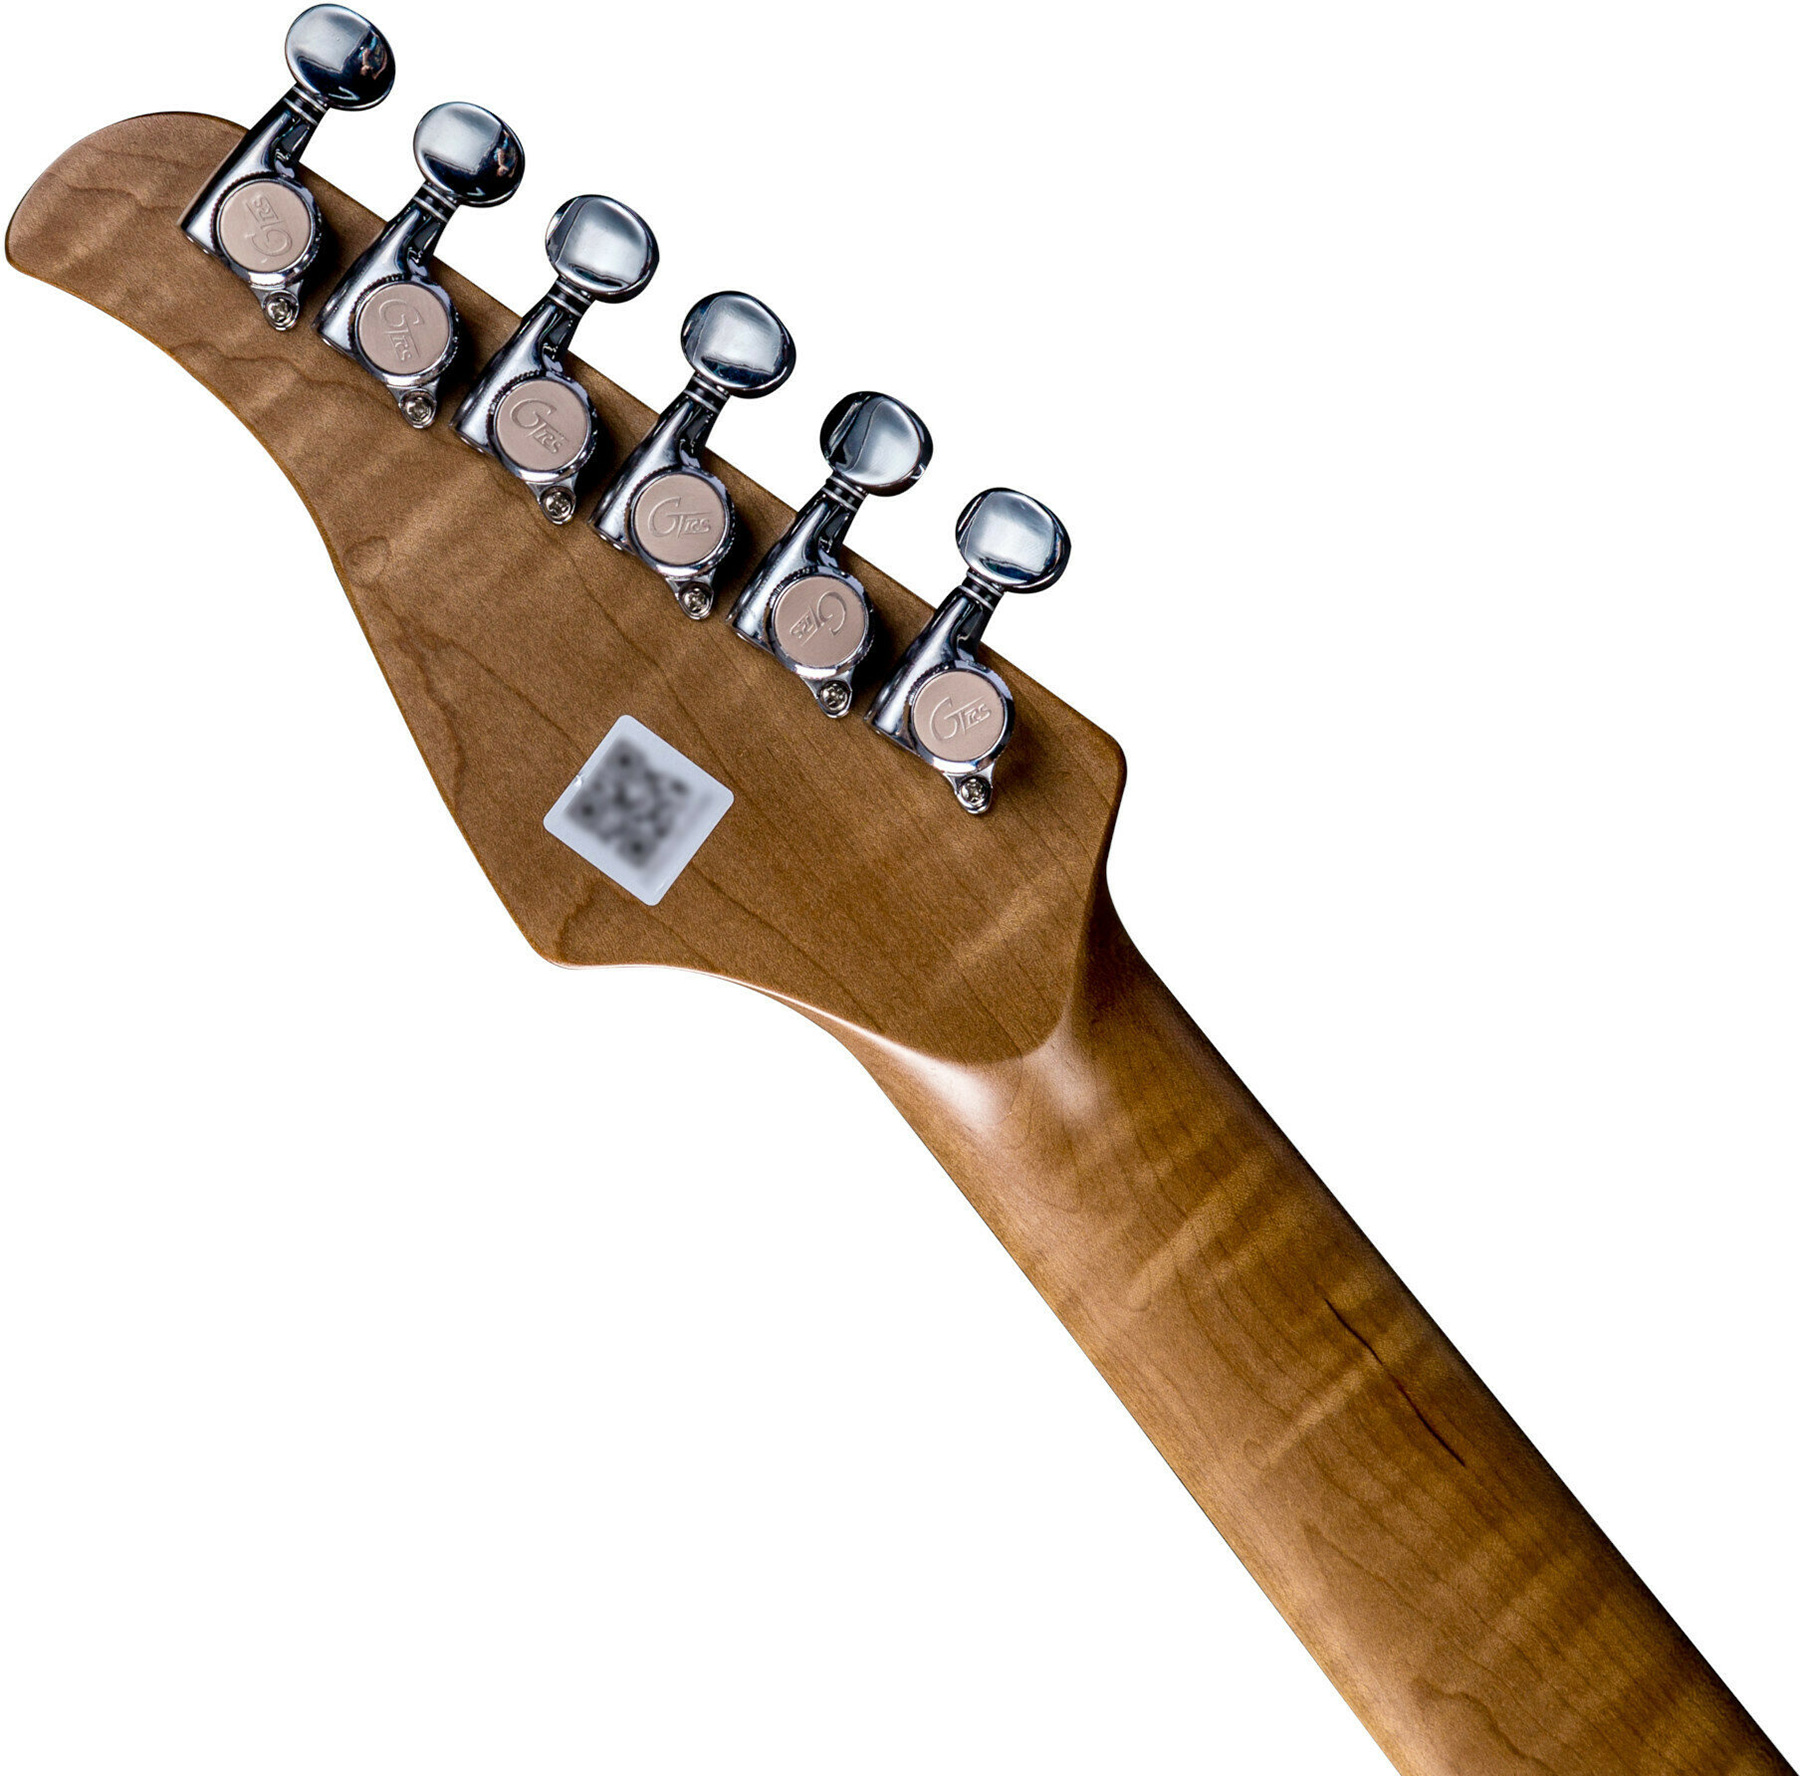 Mooer Gtrs P800 Pro Intelligent Guitar Hss Trem Rw - Olympic White - Guitarra eléctrica de modelización - Variation 5